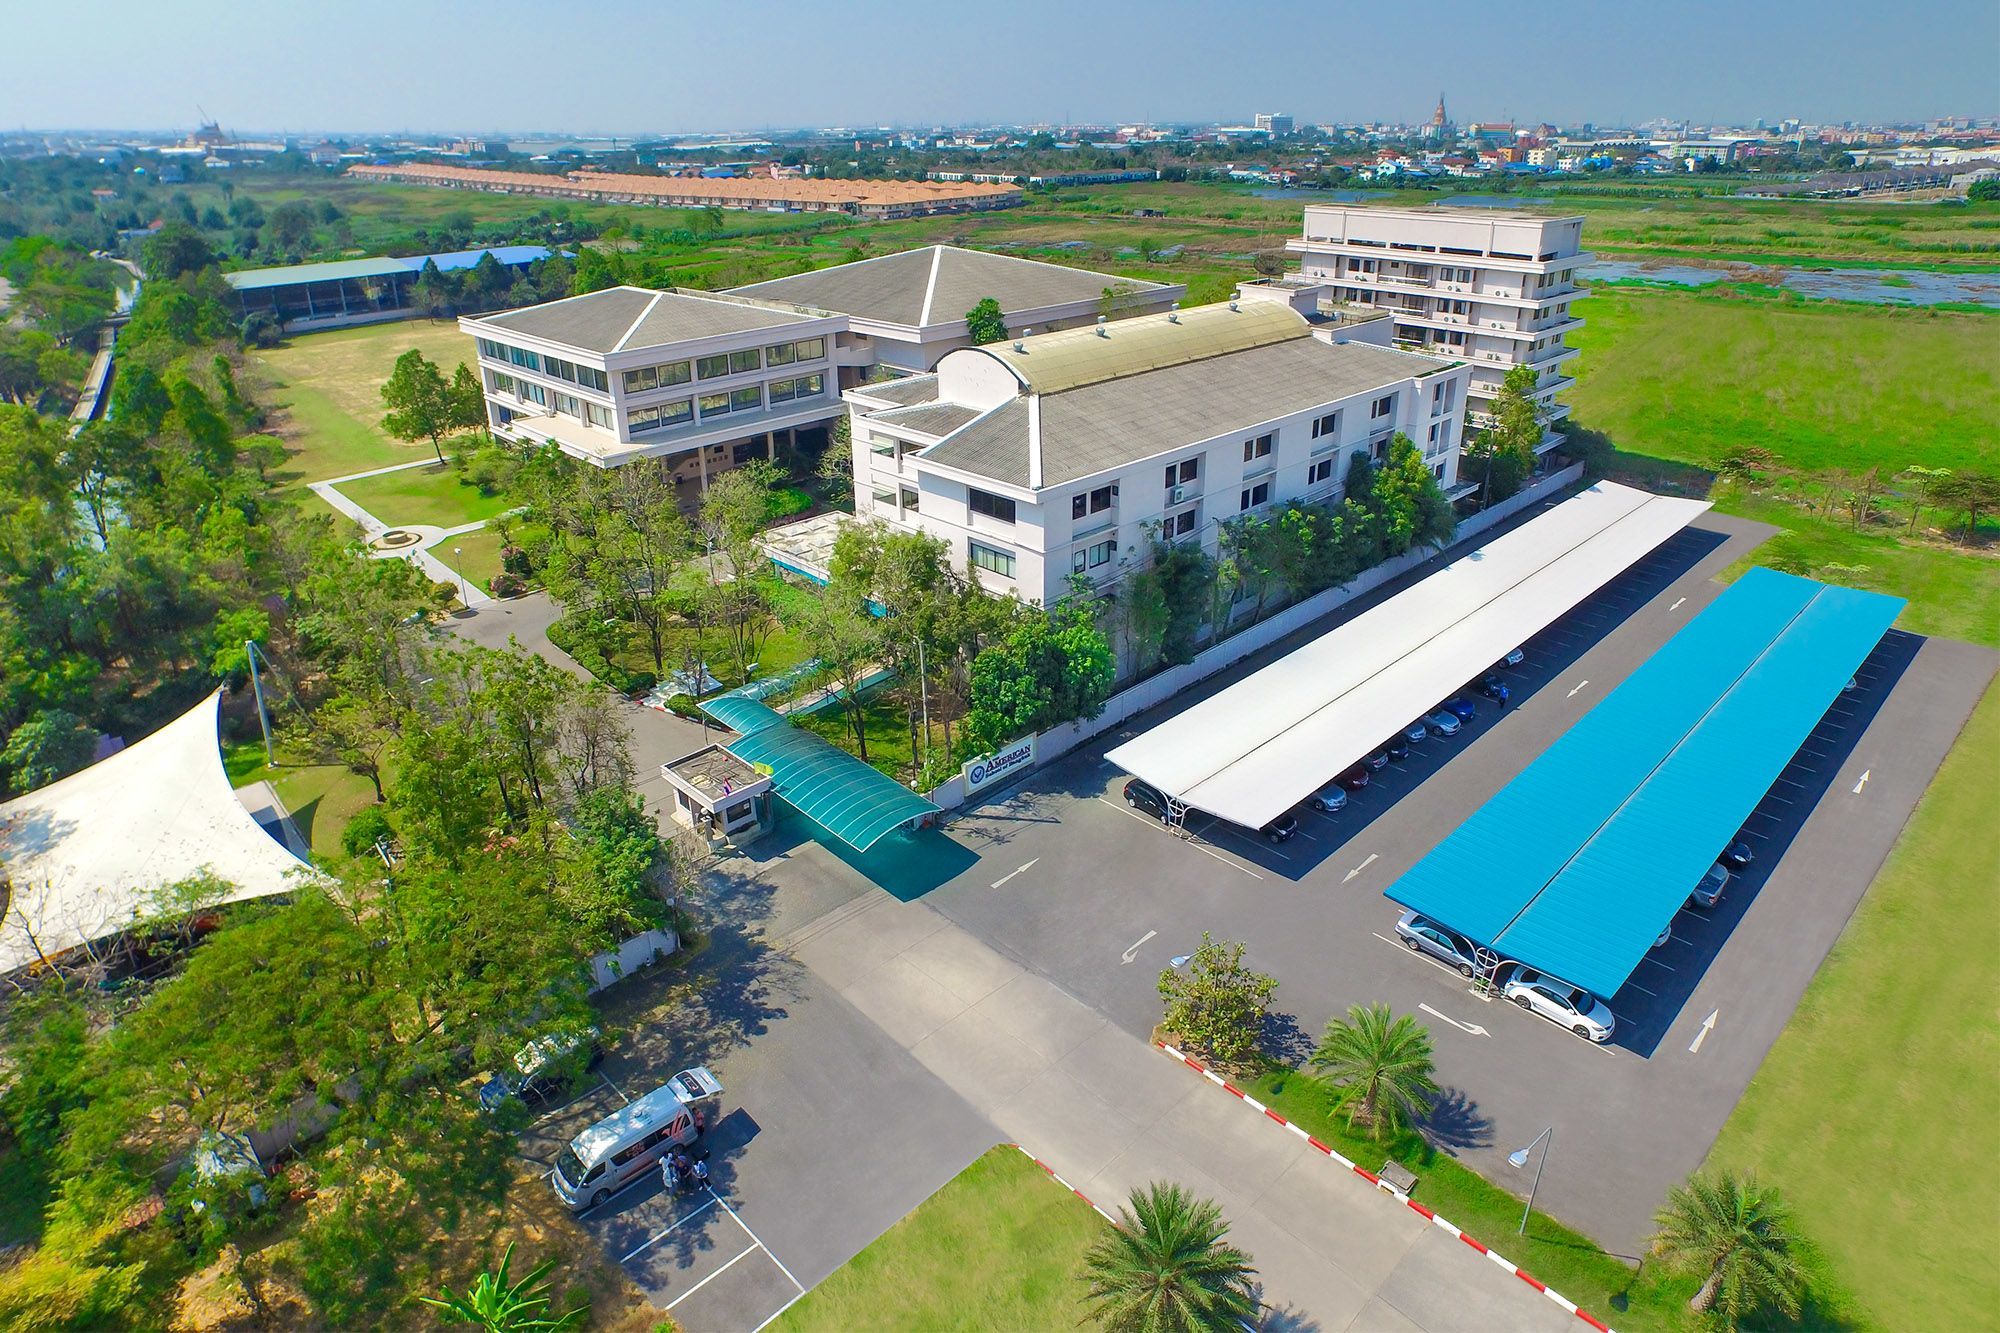 visionthai-american-school-bangkok-green-valley-asb-green-valley-campus-51-2018-06-13_04-08-45.jpg